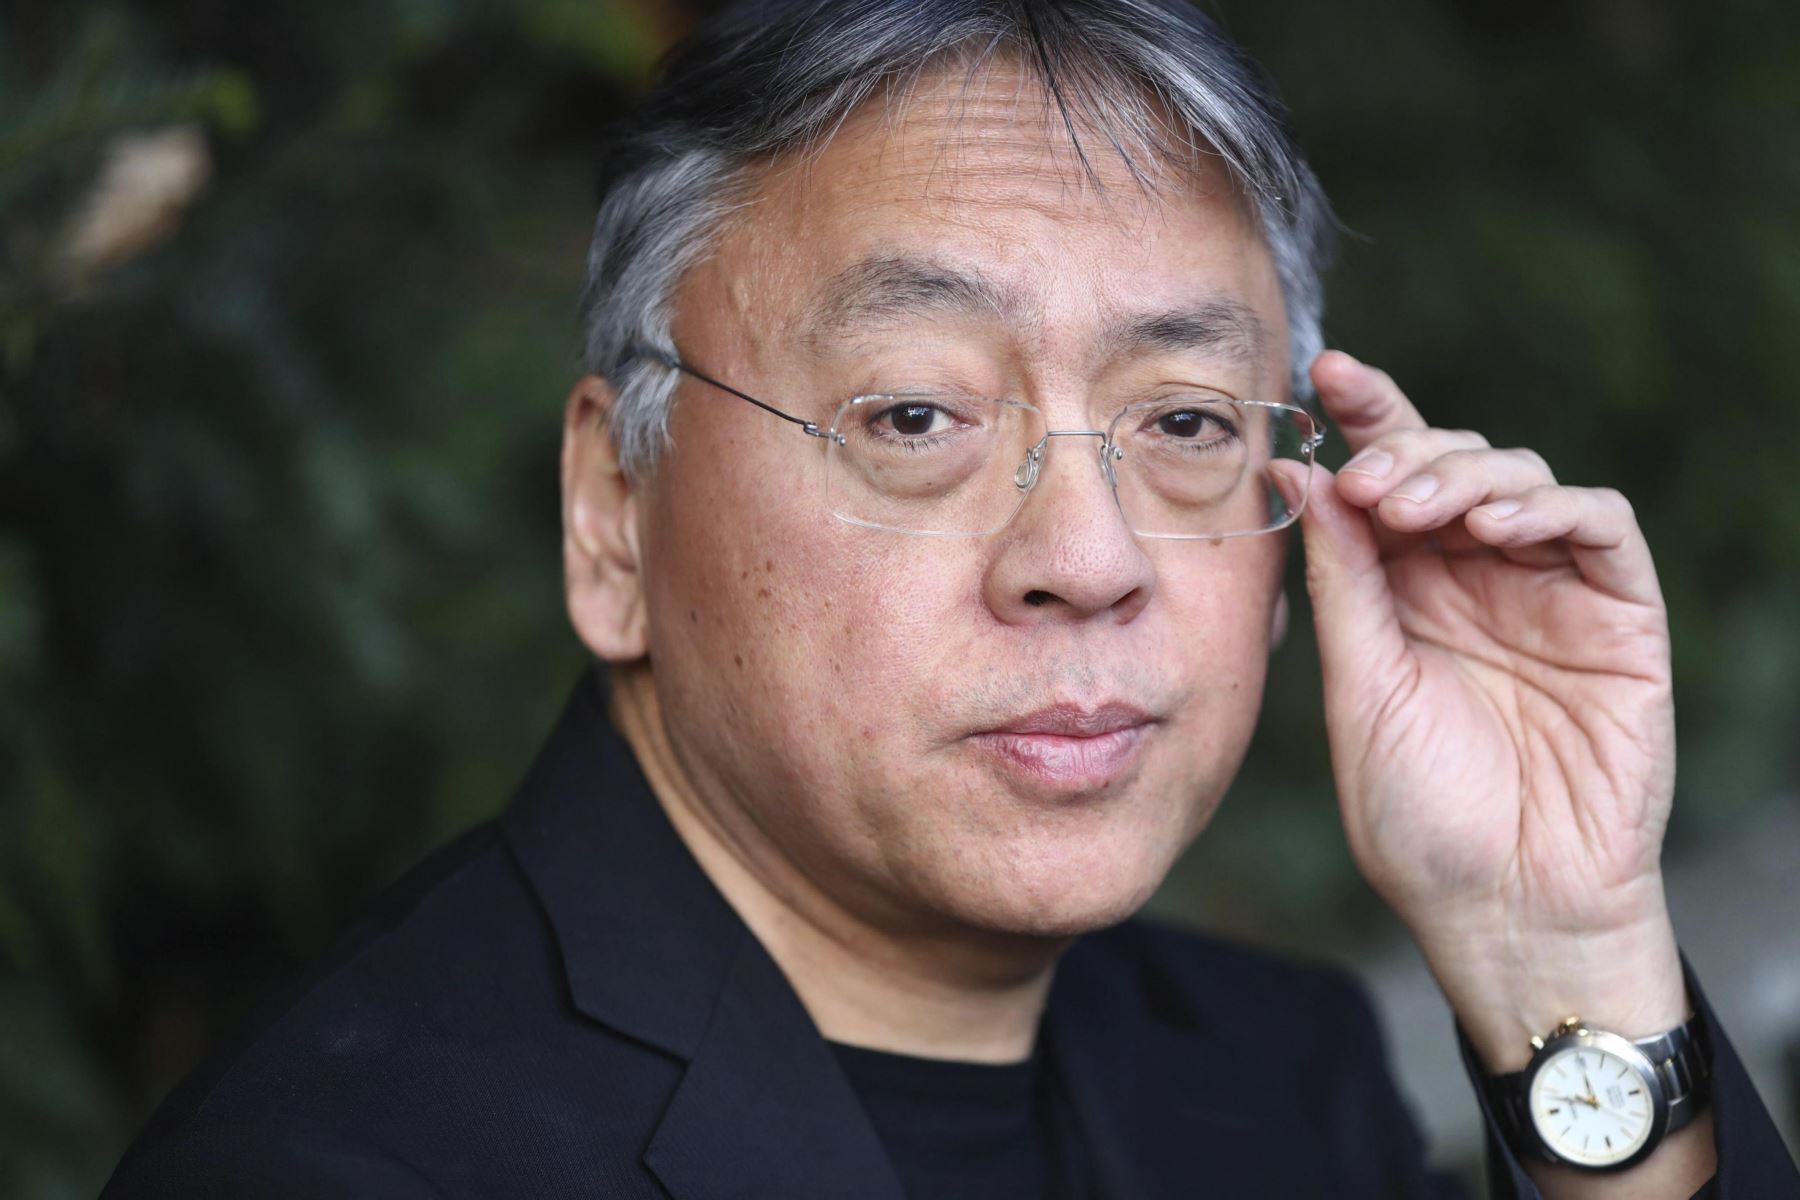 Kazuo Ishiguro, Premio Nobel de Literatura 2017